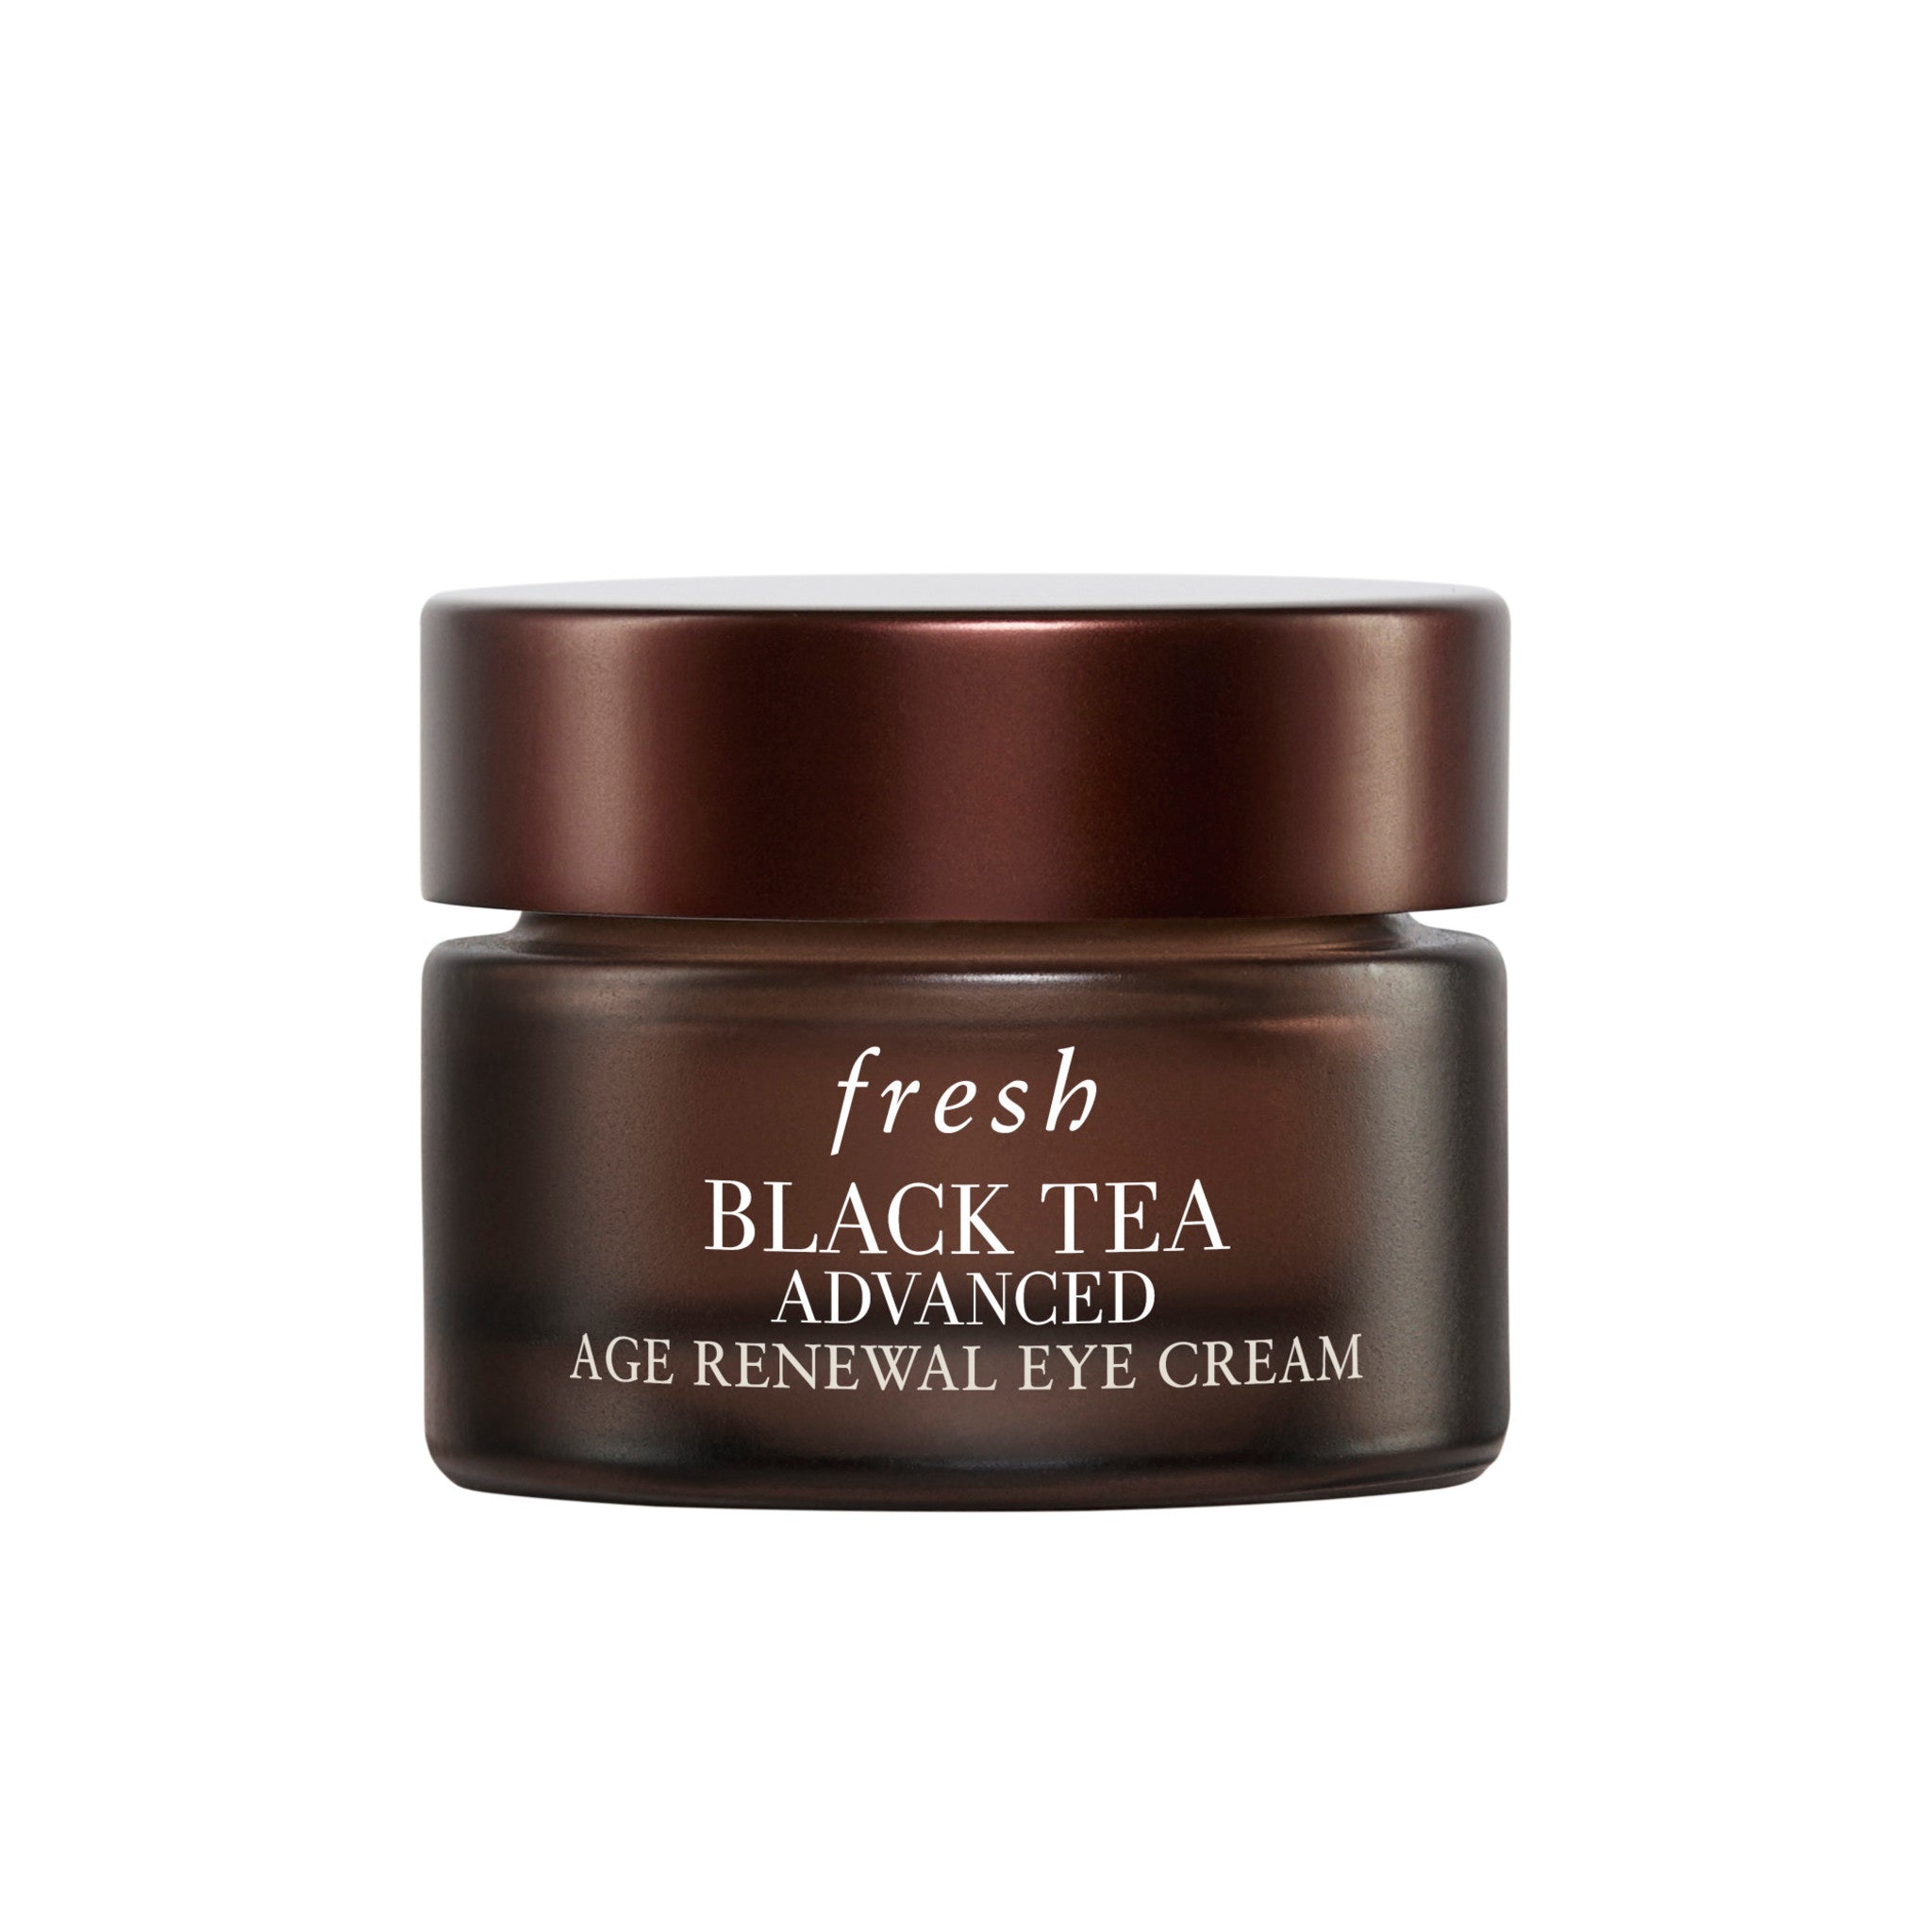 Fresh Black Tea Anti-Aging Eye Cream main image.